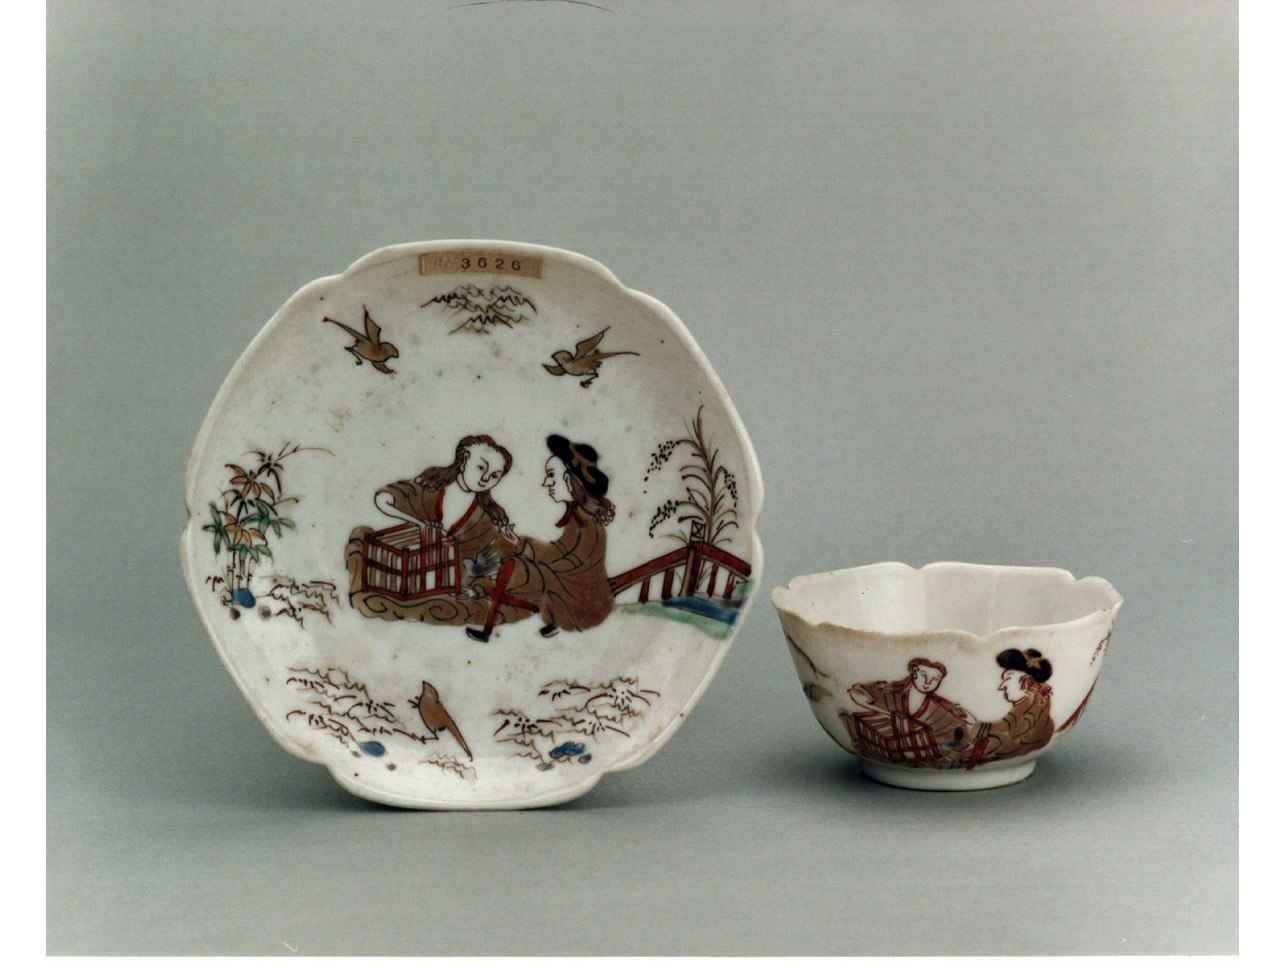 coppia di orientali in giardino (tazzina) - manifattura cinese (sec. XVIII)